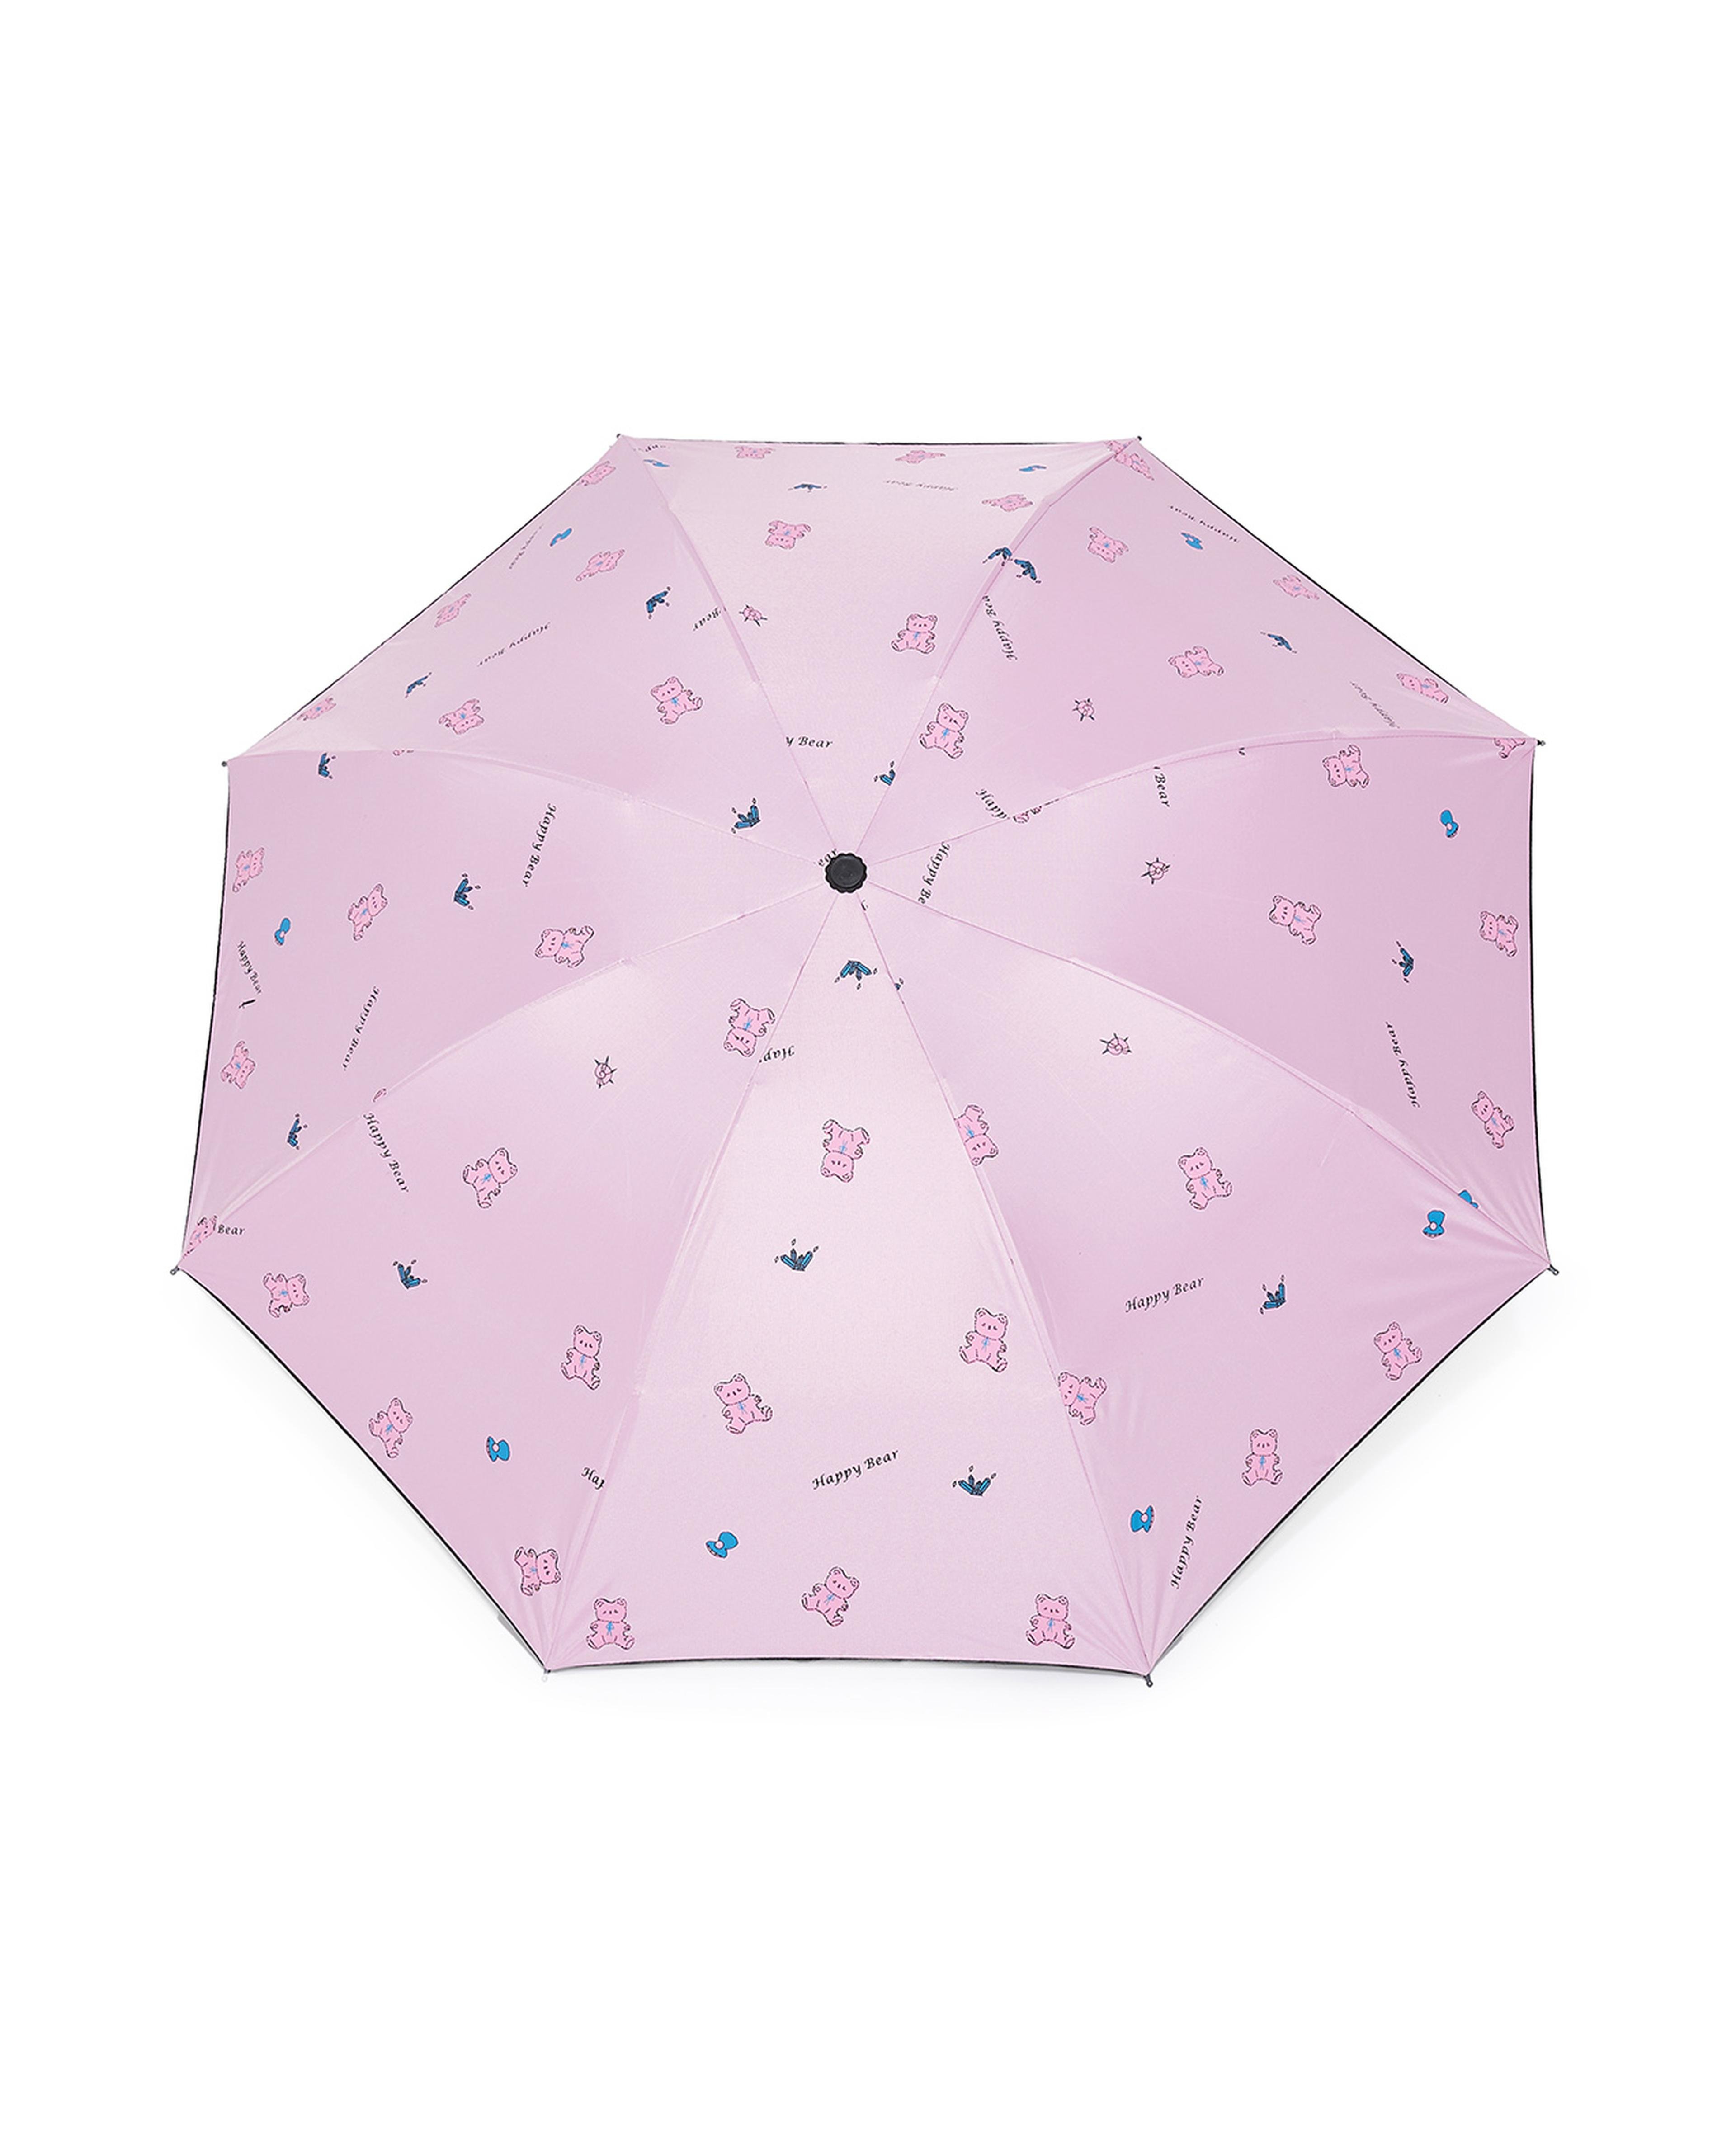 Printed Umbrella